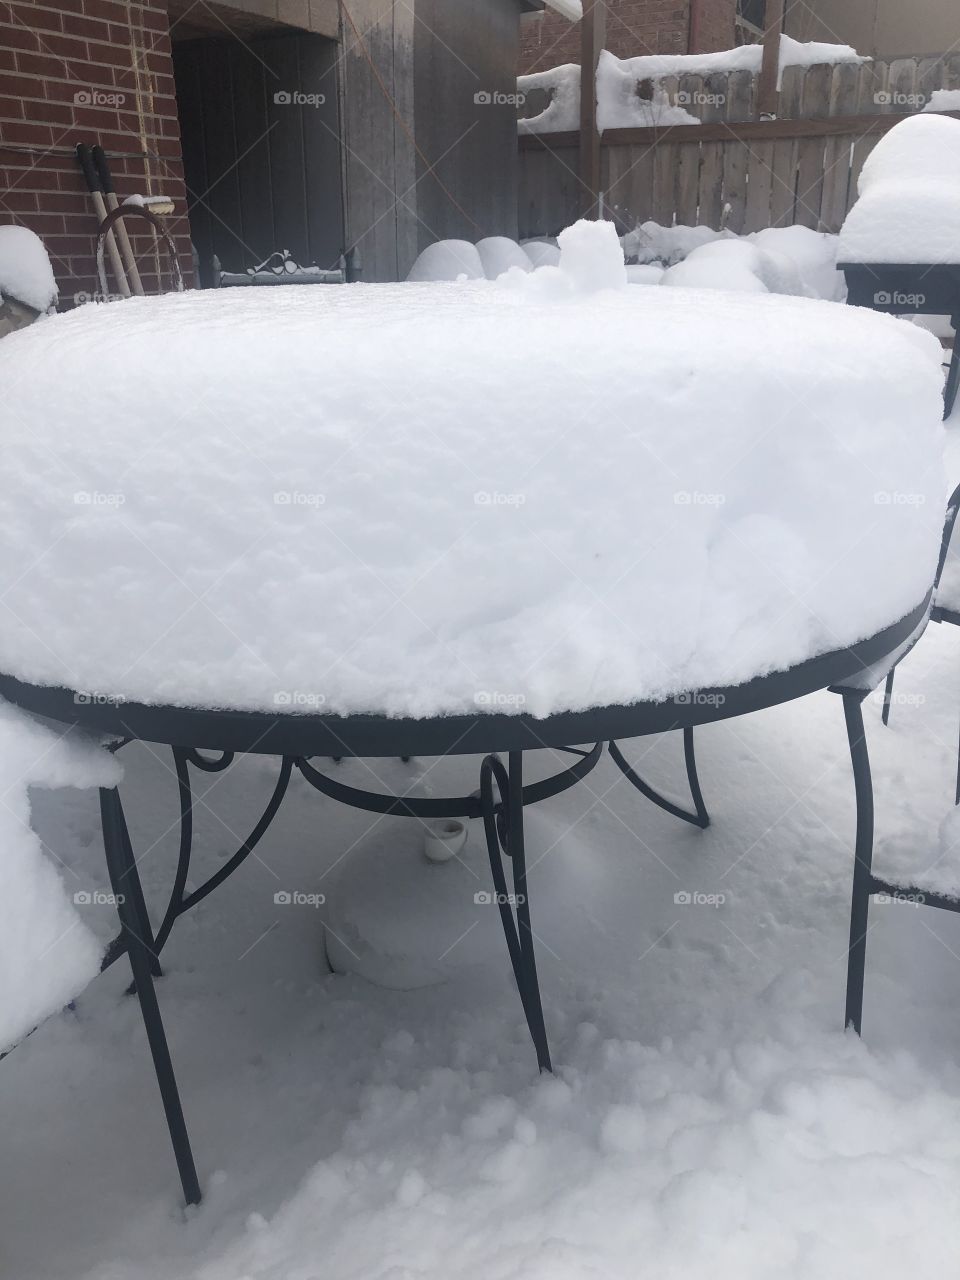 Snow on table